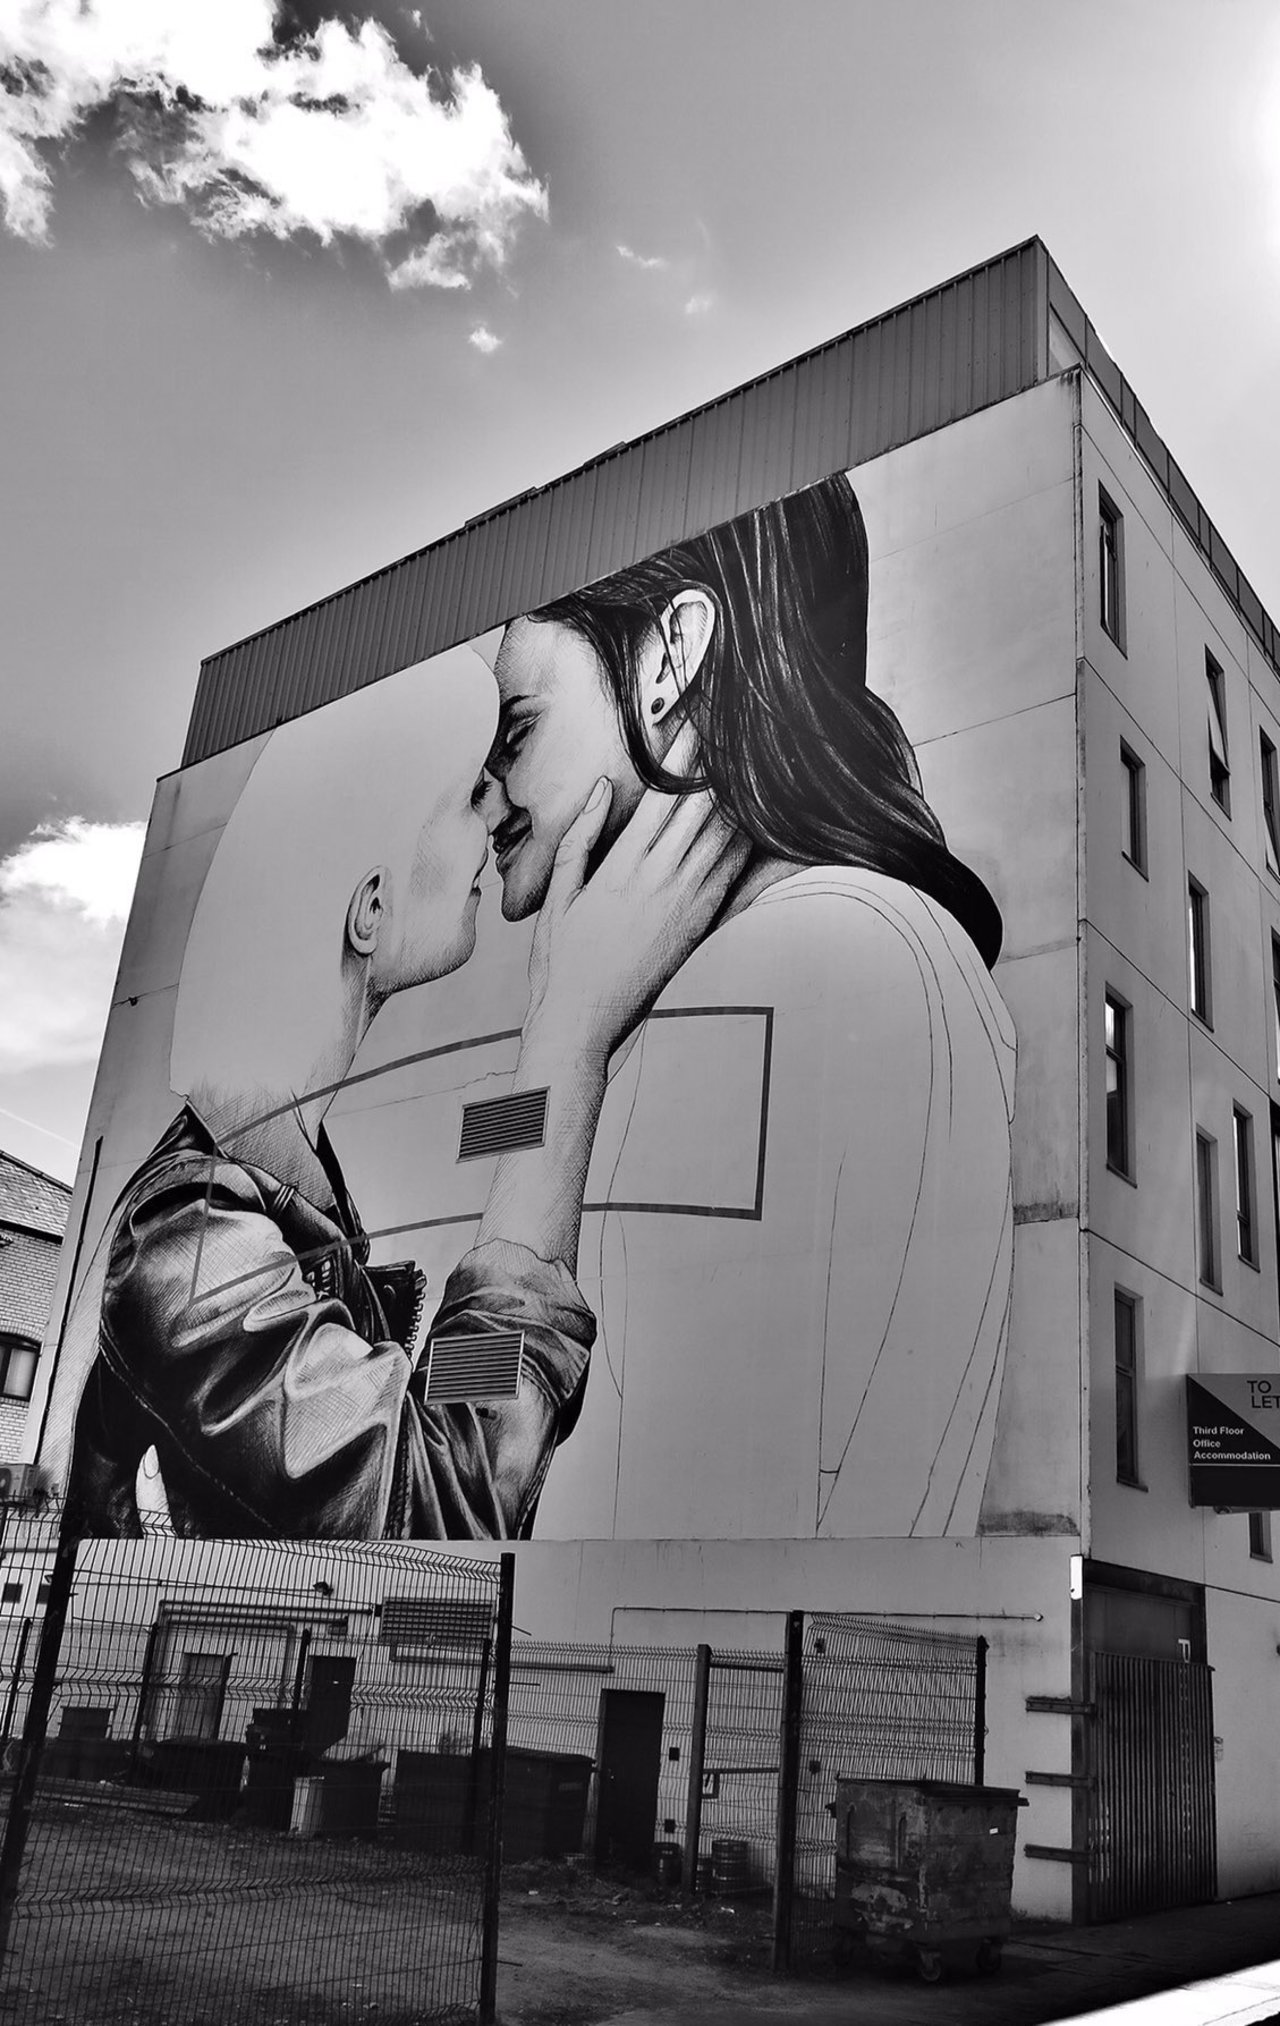 New Street Art for BelfastPride looking @ the LGBTQ family by joecaslin. See at 1 Hill Street, Belfast #streetart https://t.co/gXvHg8nyuD